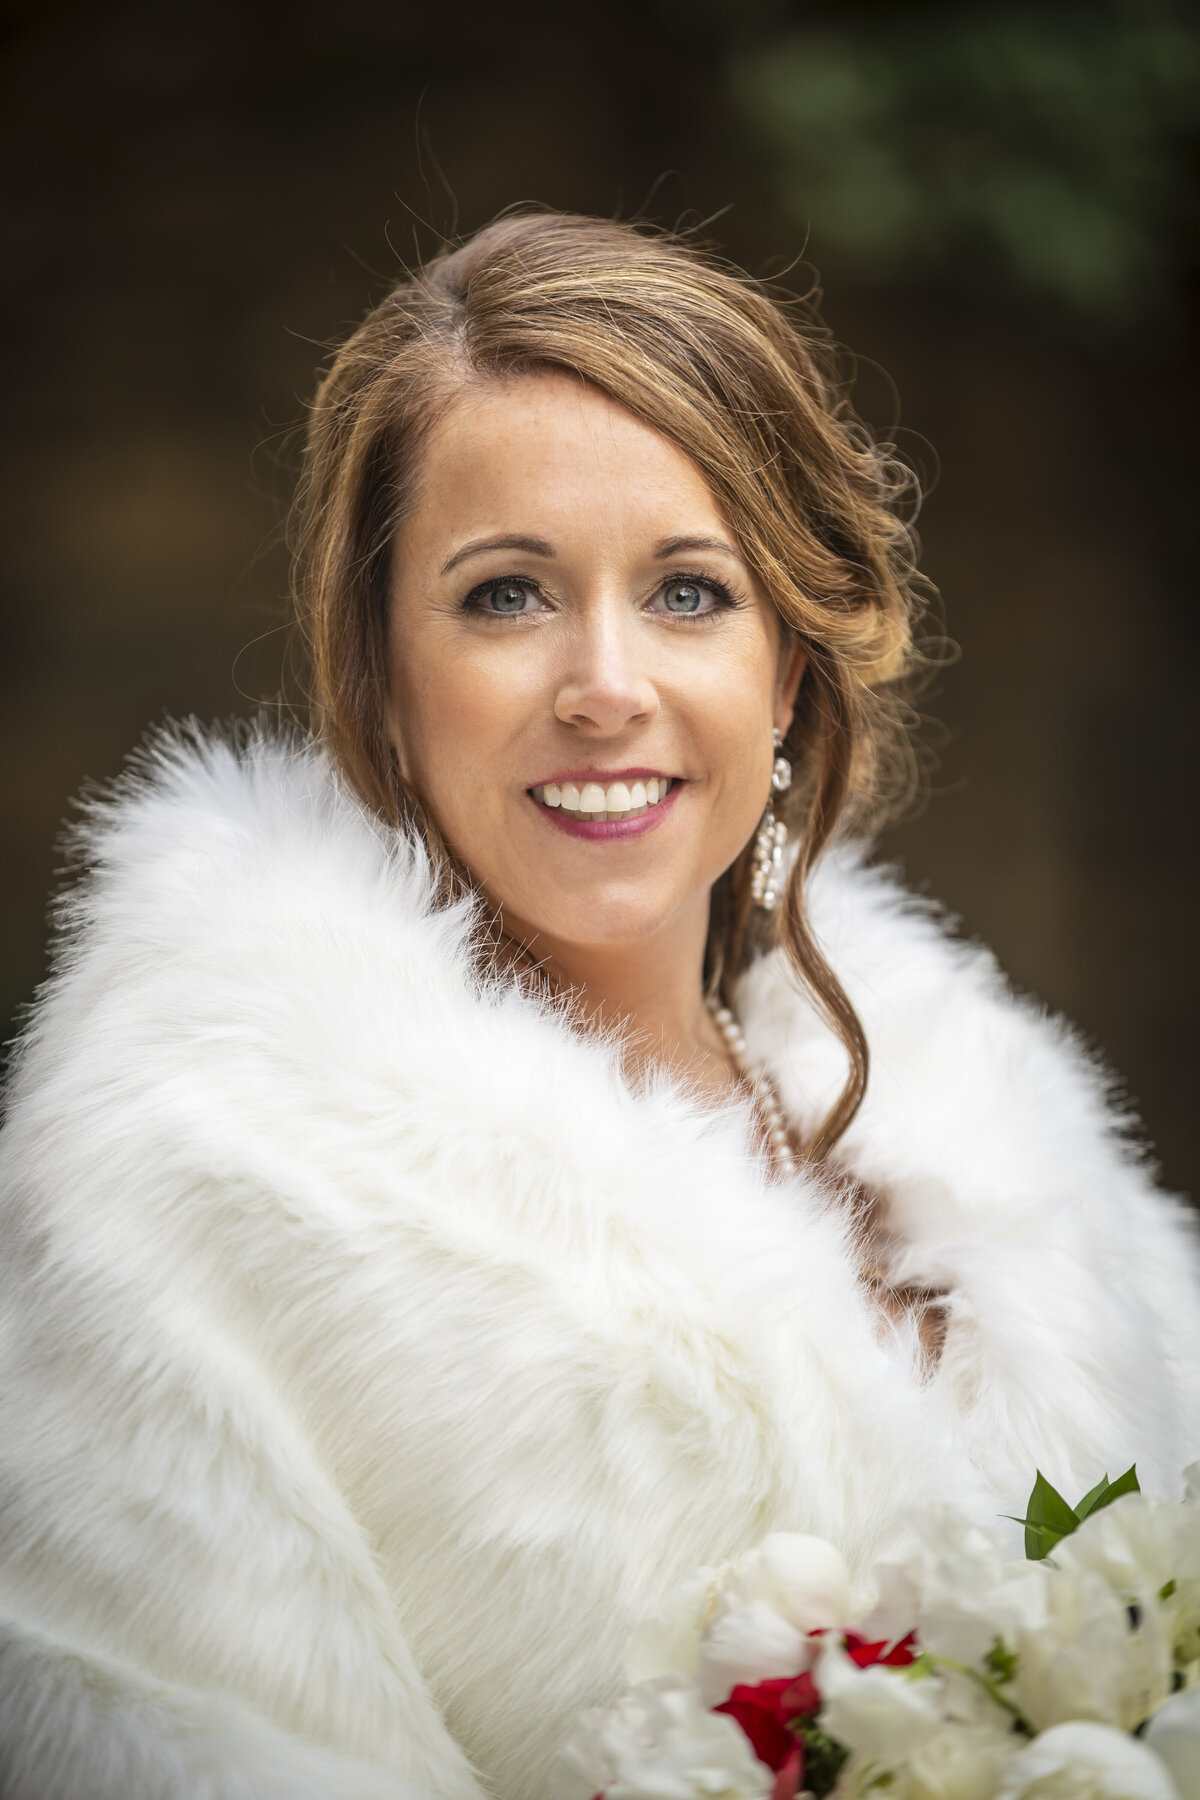 Bride wearing luxury fur while smiling.